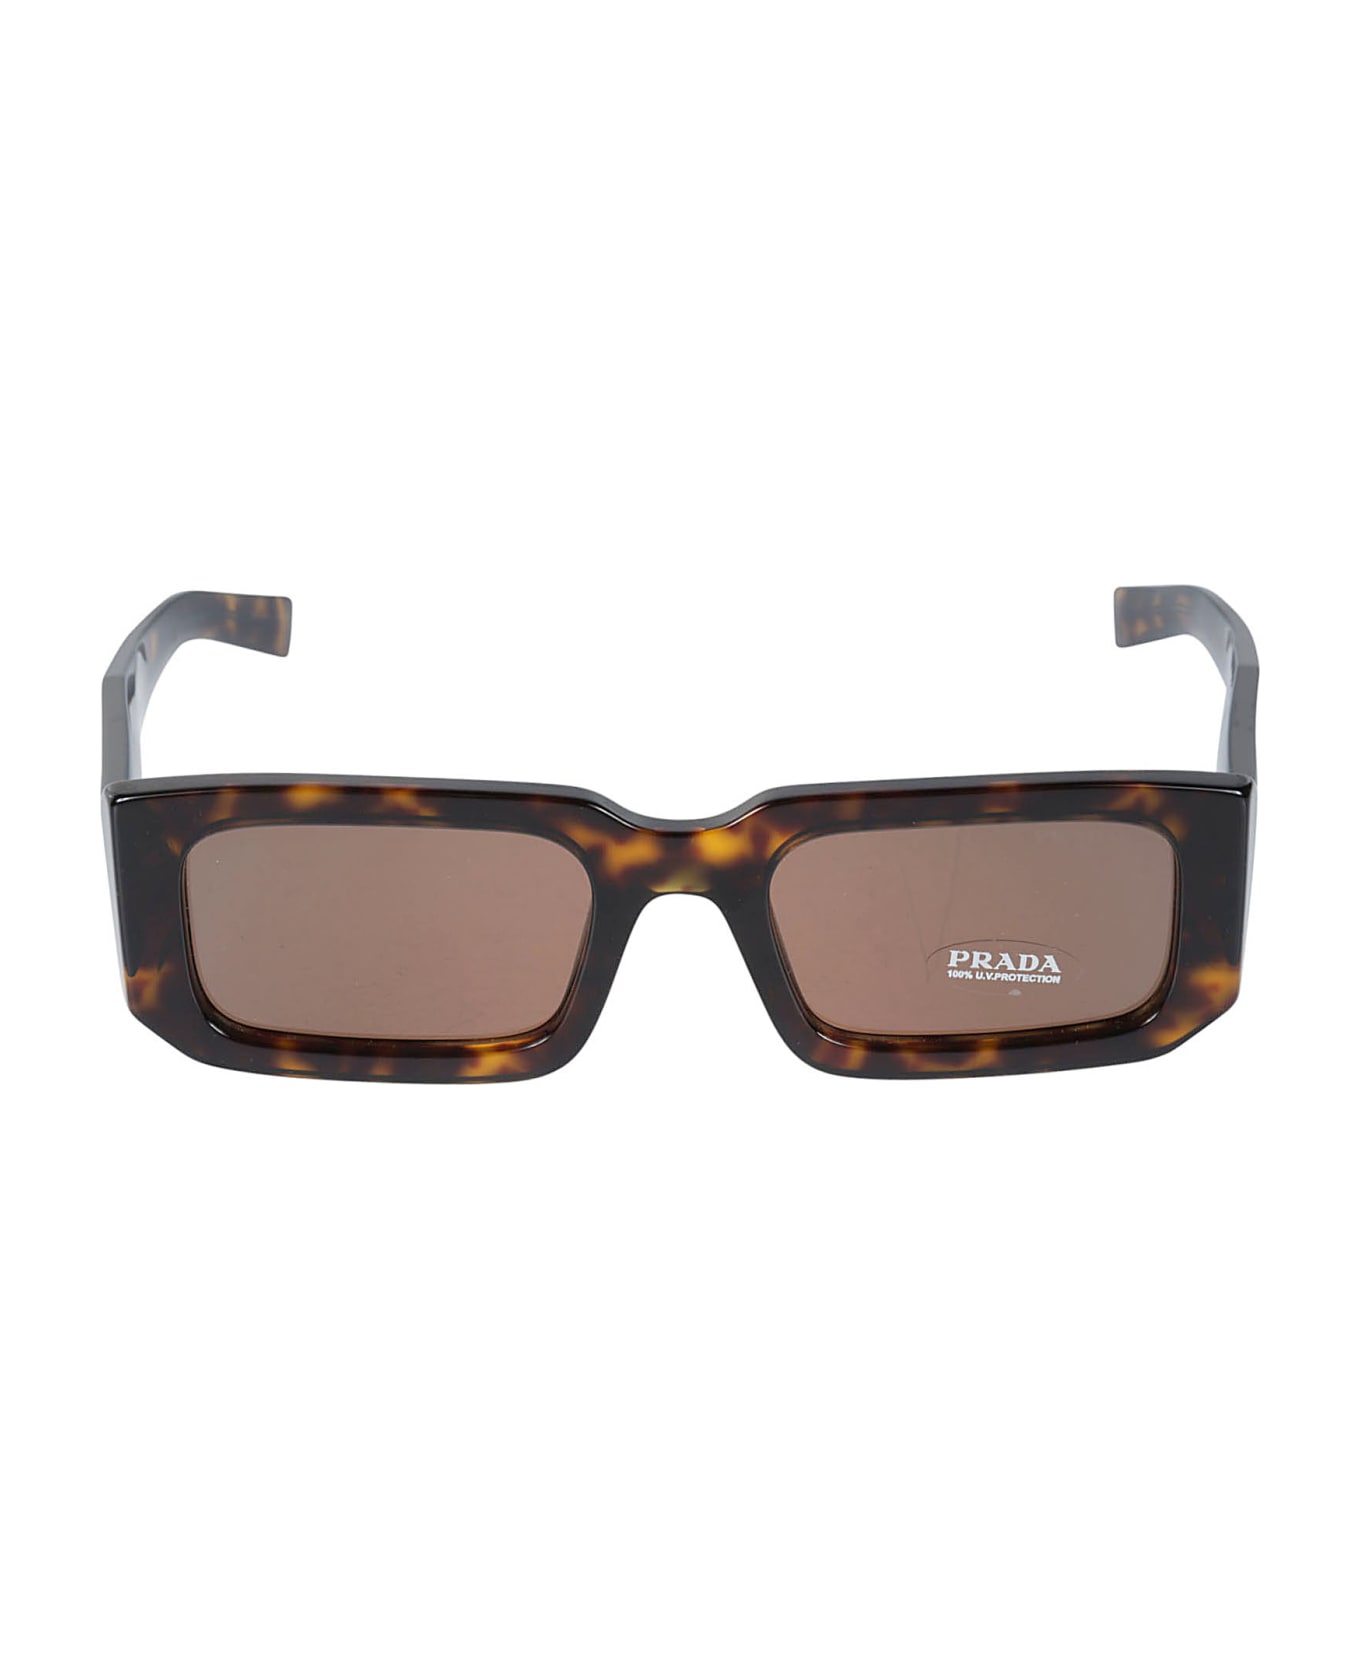 Prada Eyewear Square Frame Sunglasses - 2AU8C1 サングラス